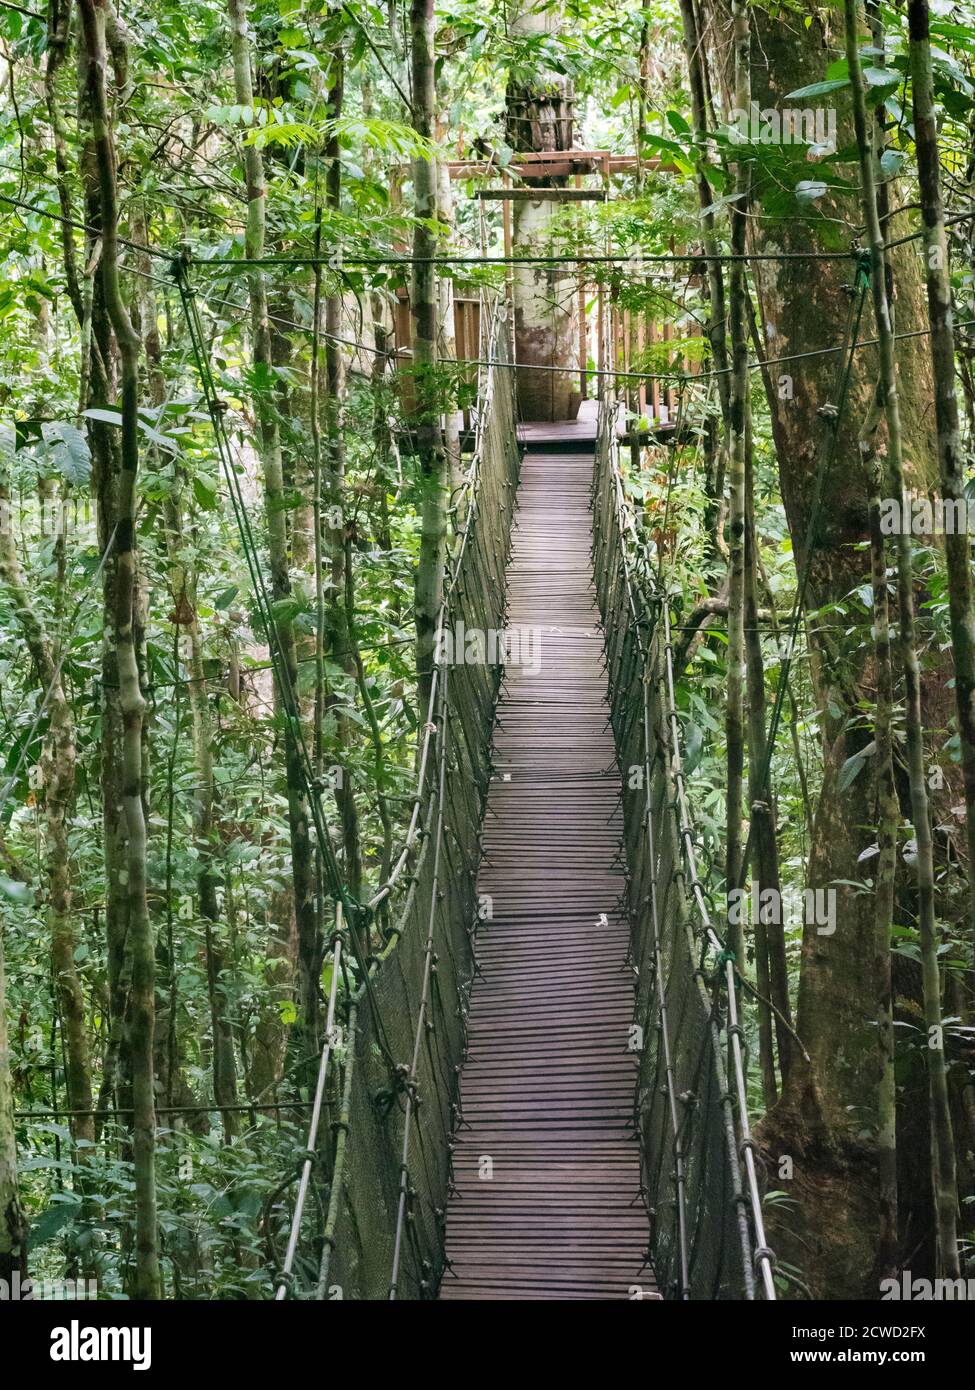 Amazon rainforest canopy bridge hi-res stock photography and images - Alamy